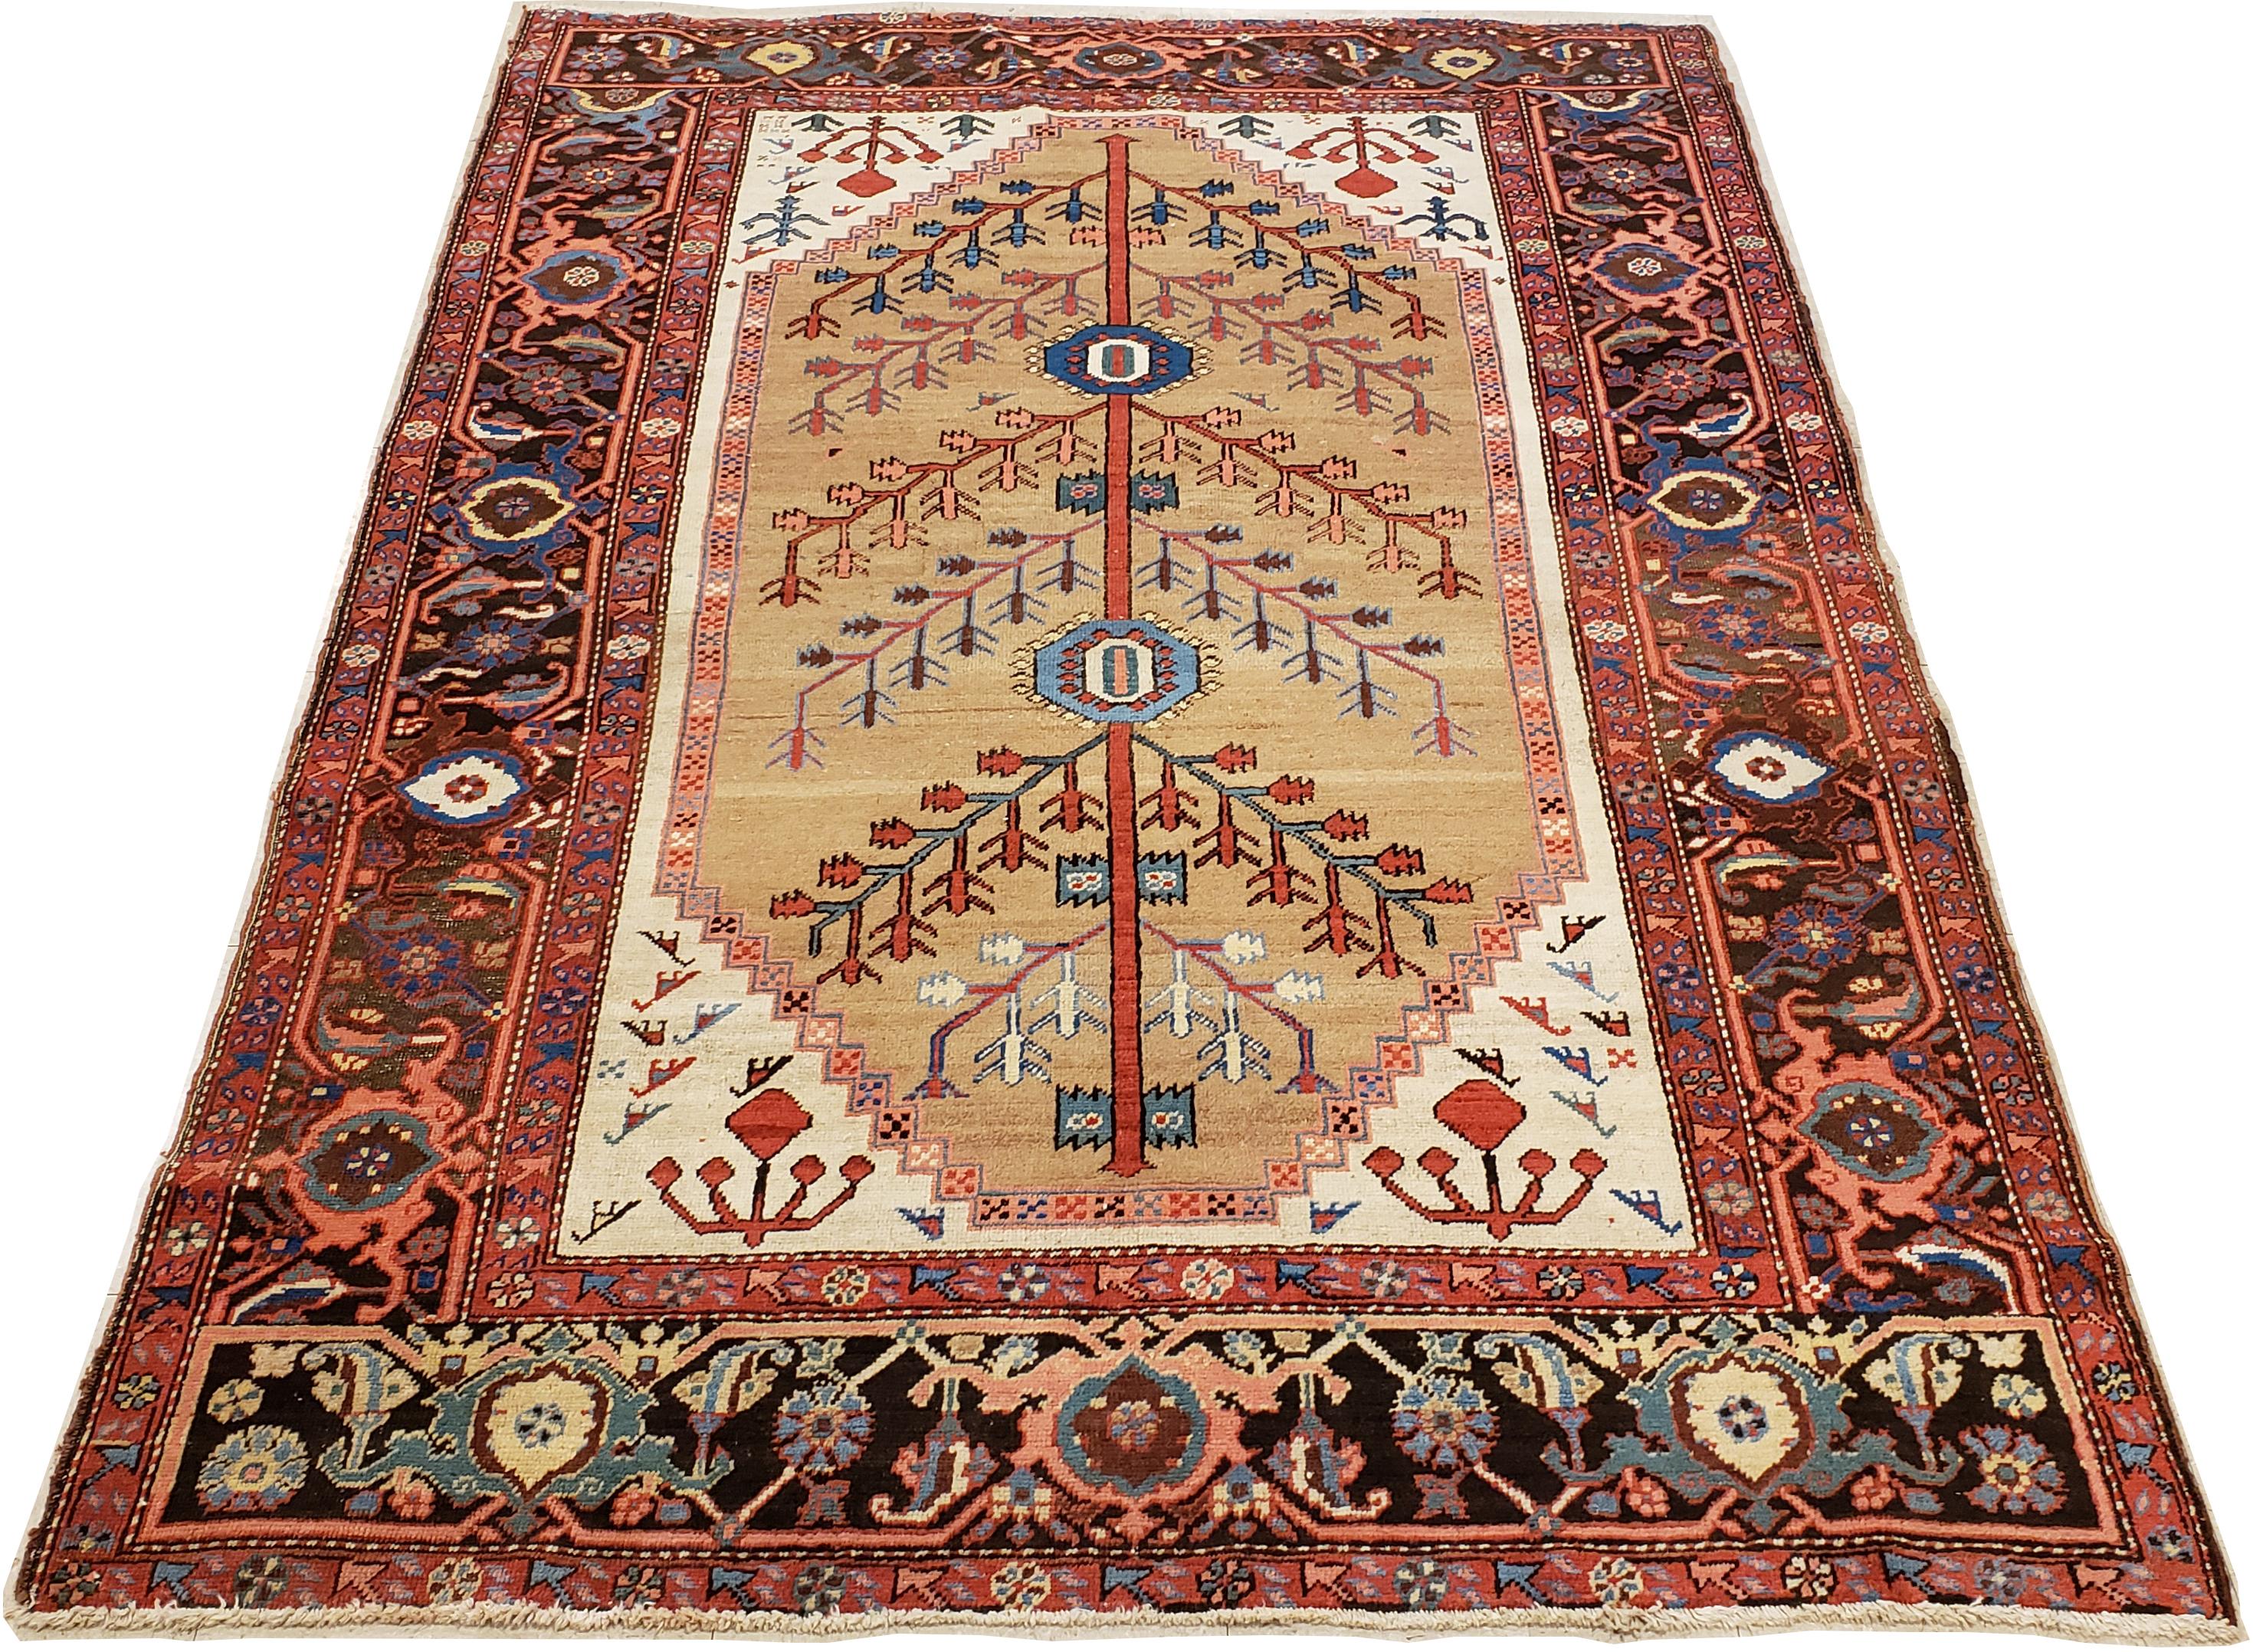 Antique Persian Bakhshaish Carpet, Handmade Wool Oriental Rug, Ivory Light Blue For Sale 1